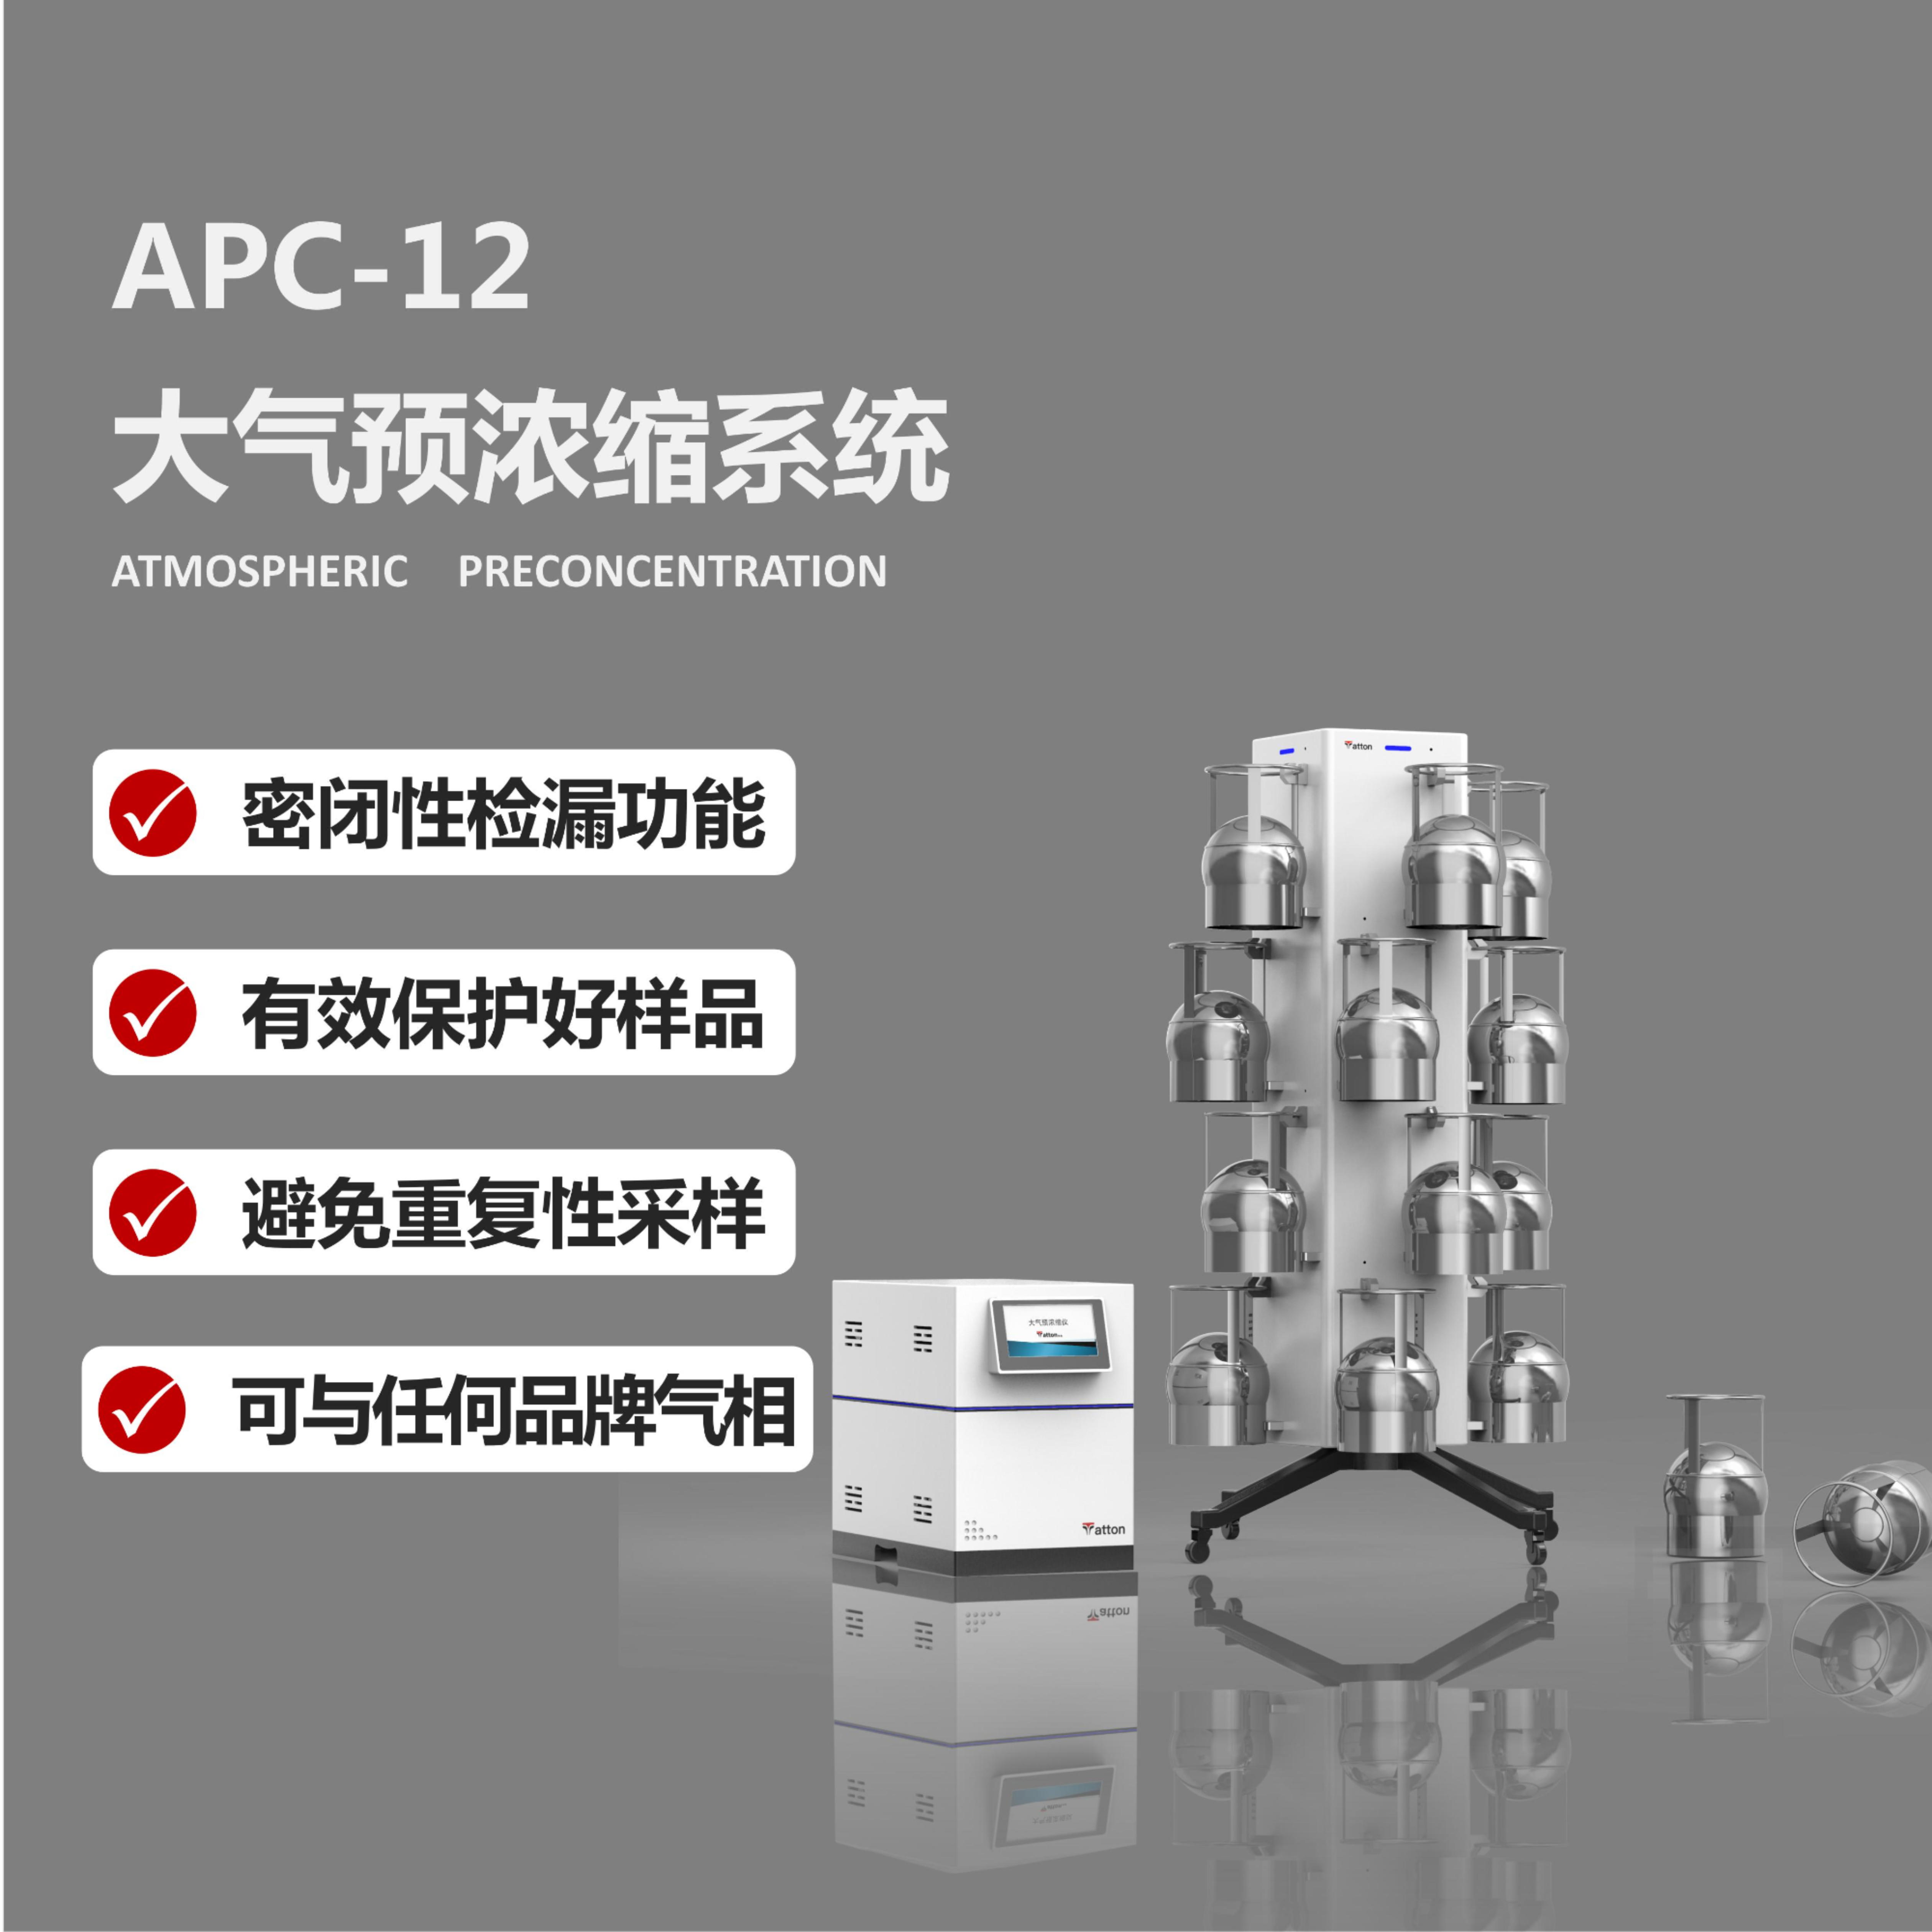 APC-40 大气预浓缩系统